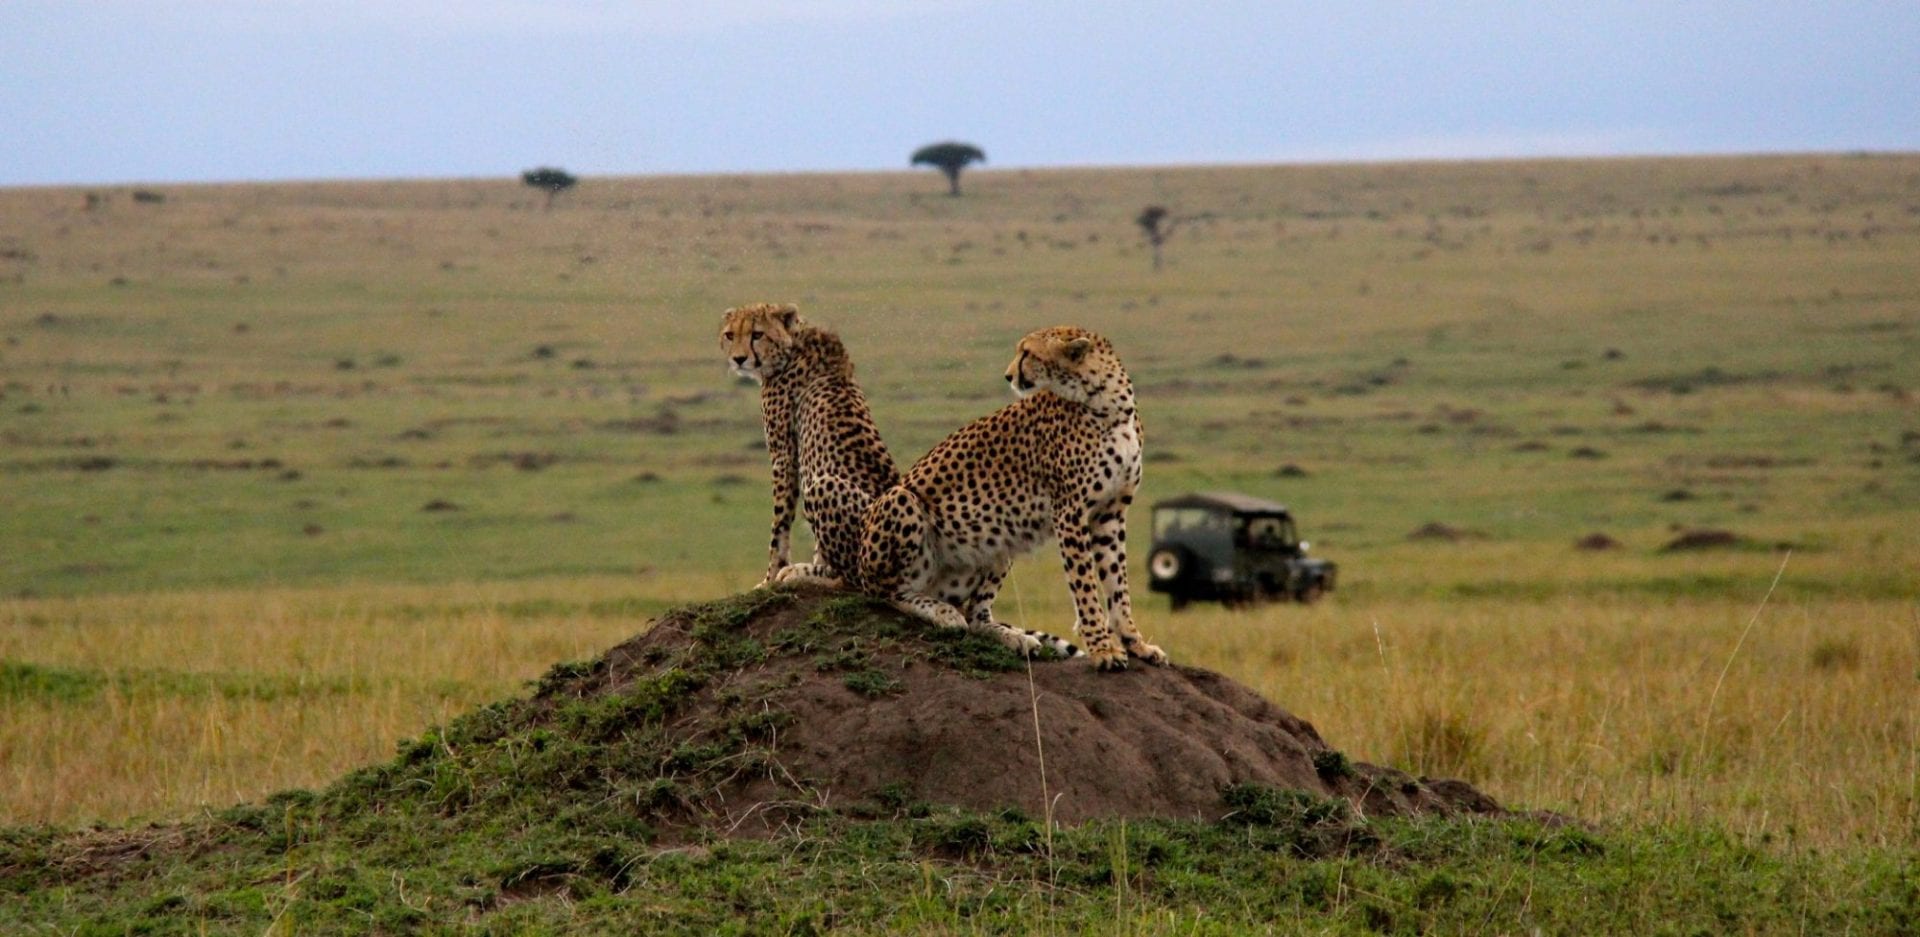 Rothchild_Safaris_Cheetah_(3)